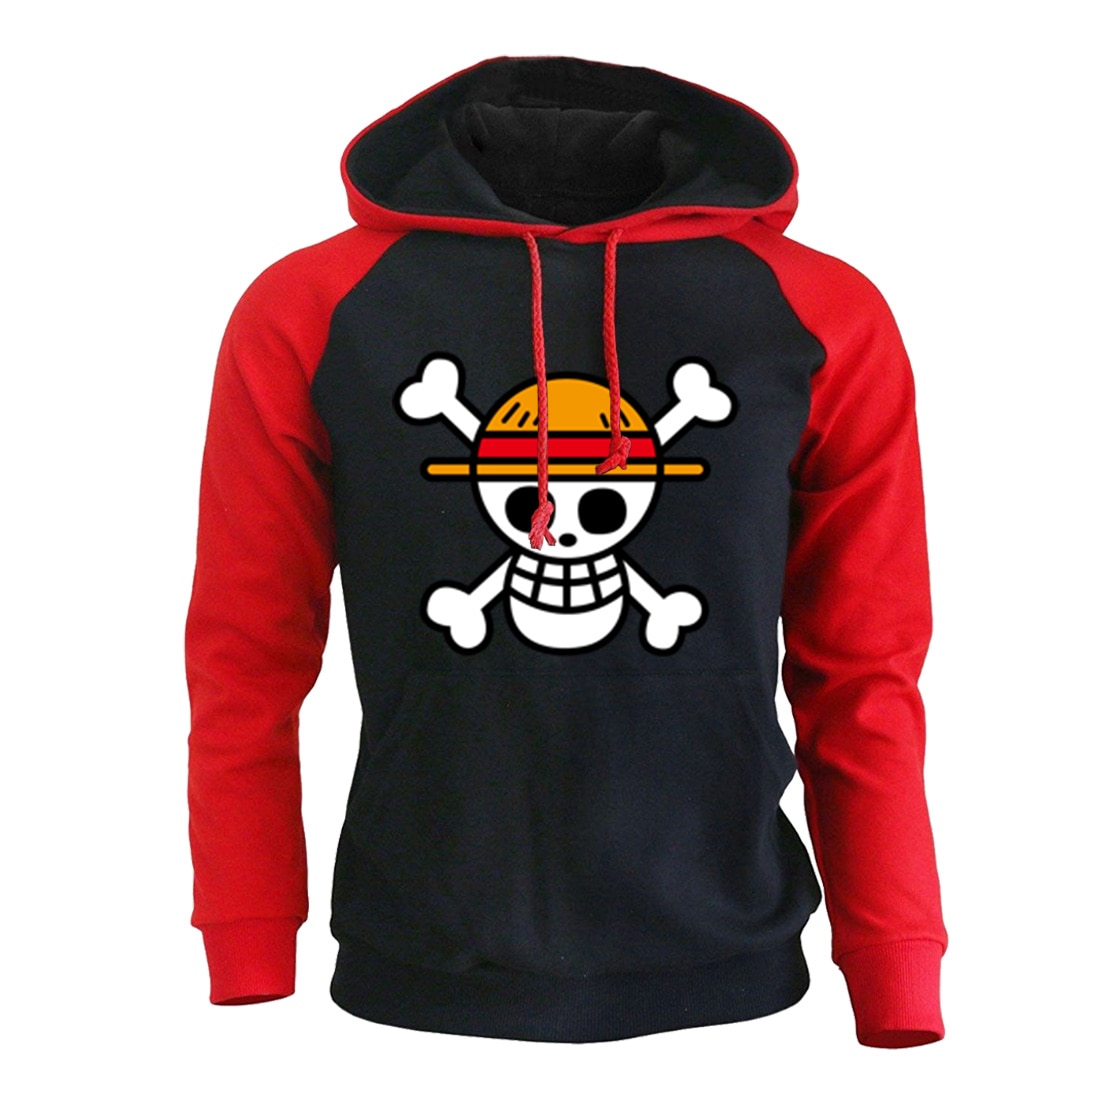 One Piece – Pirate Logo Hoodies and Sweatshirts (4 colors) Hoodies & Sweatshirts